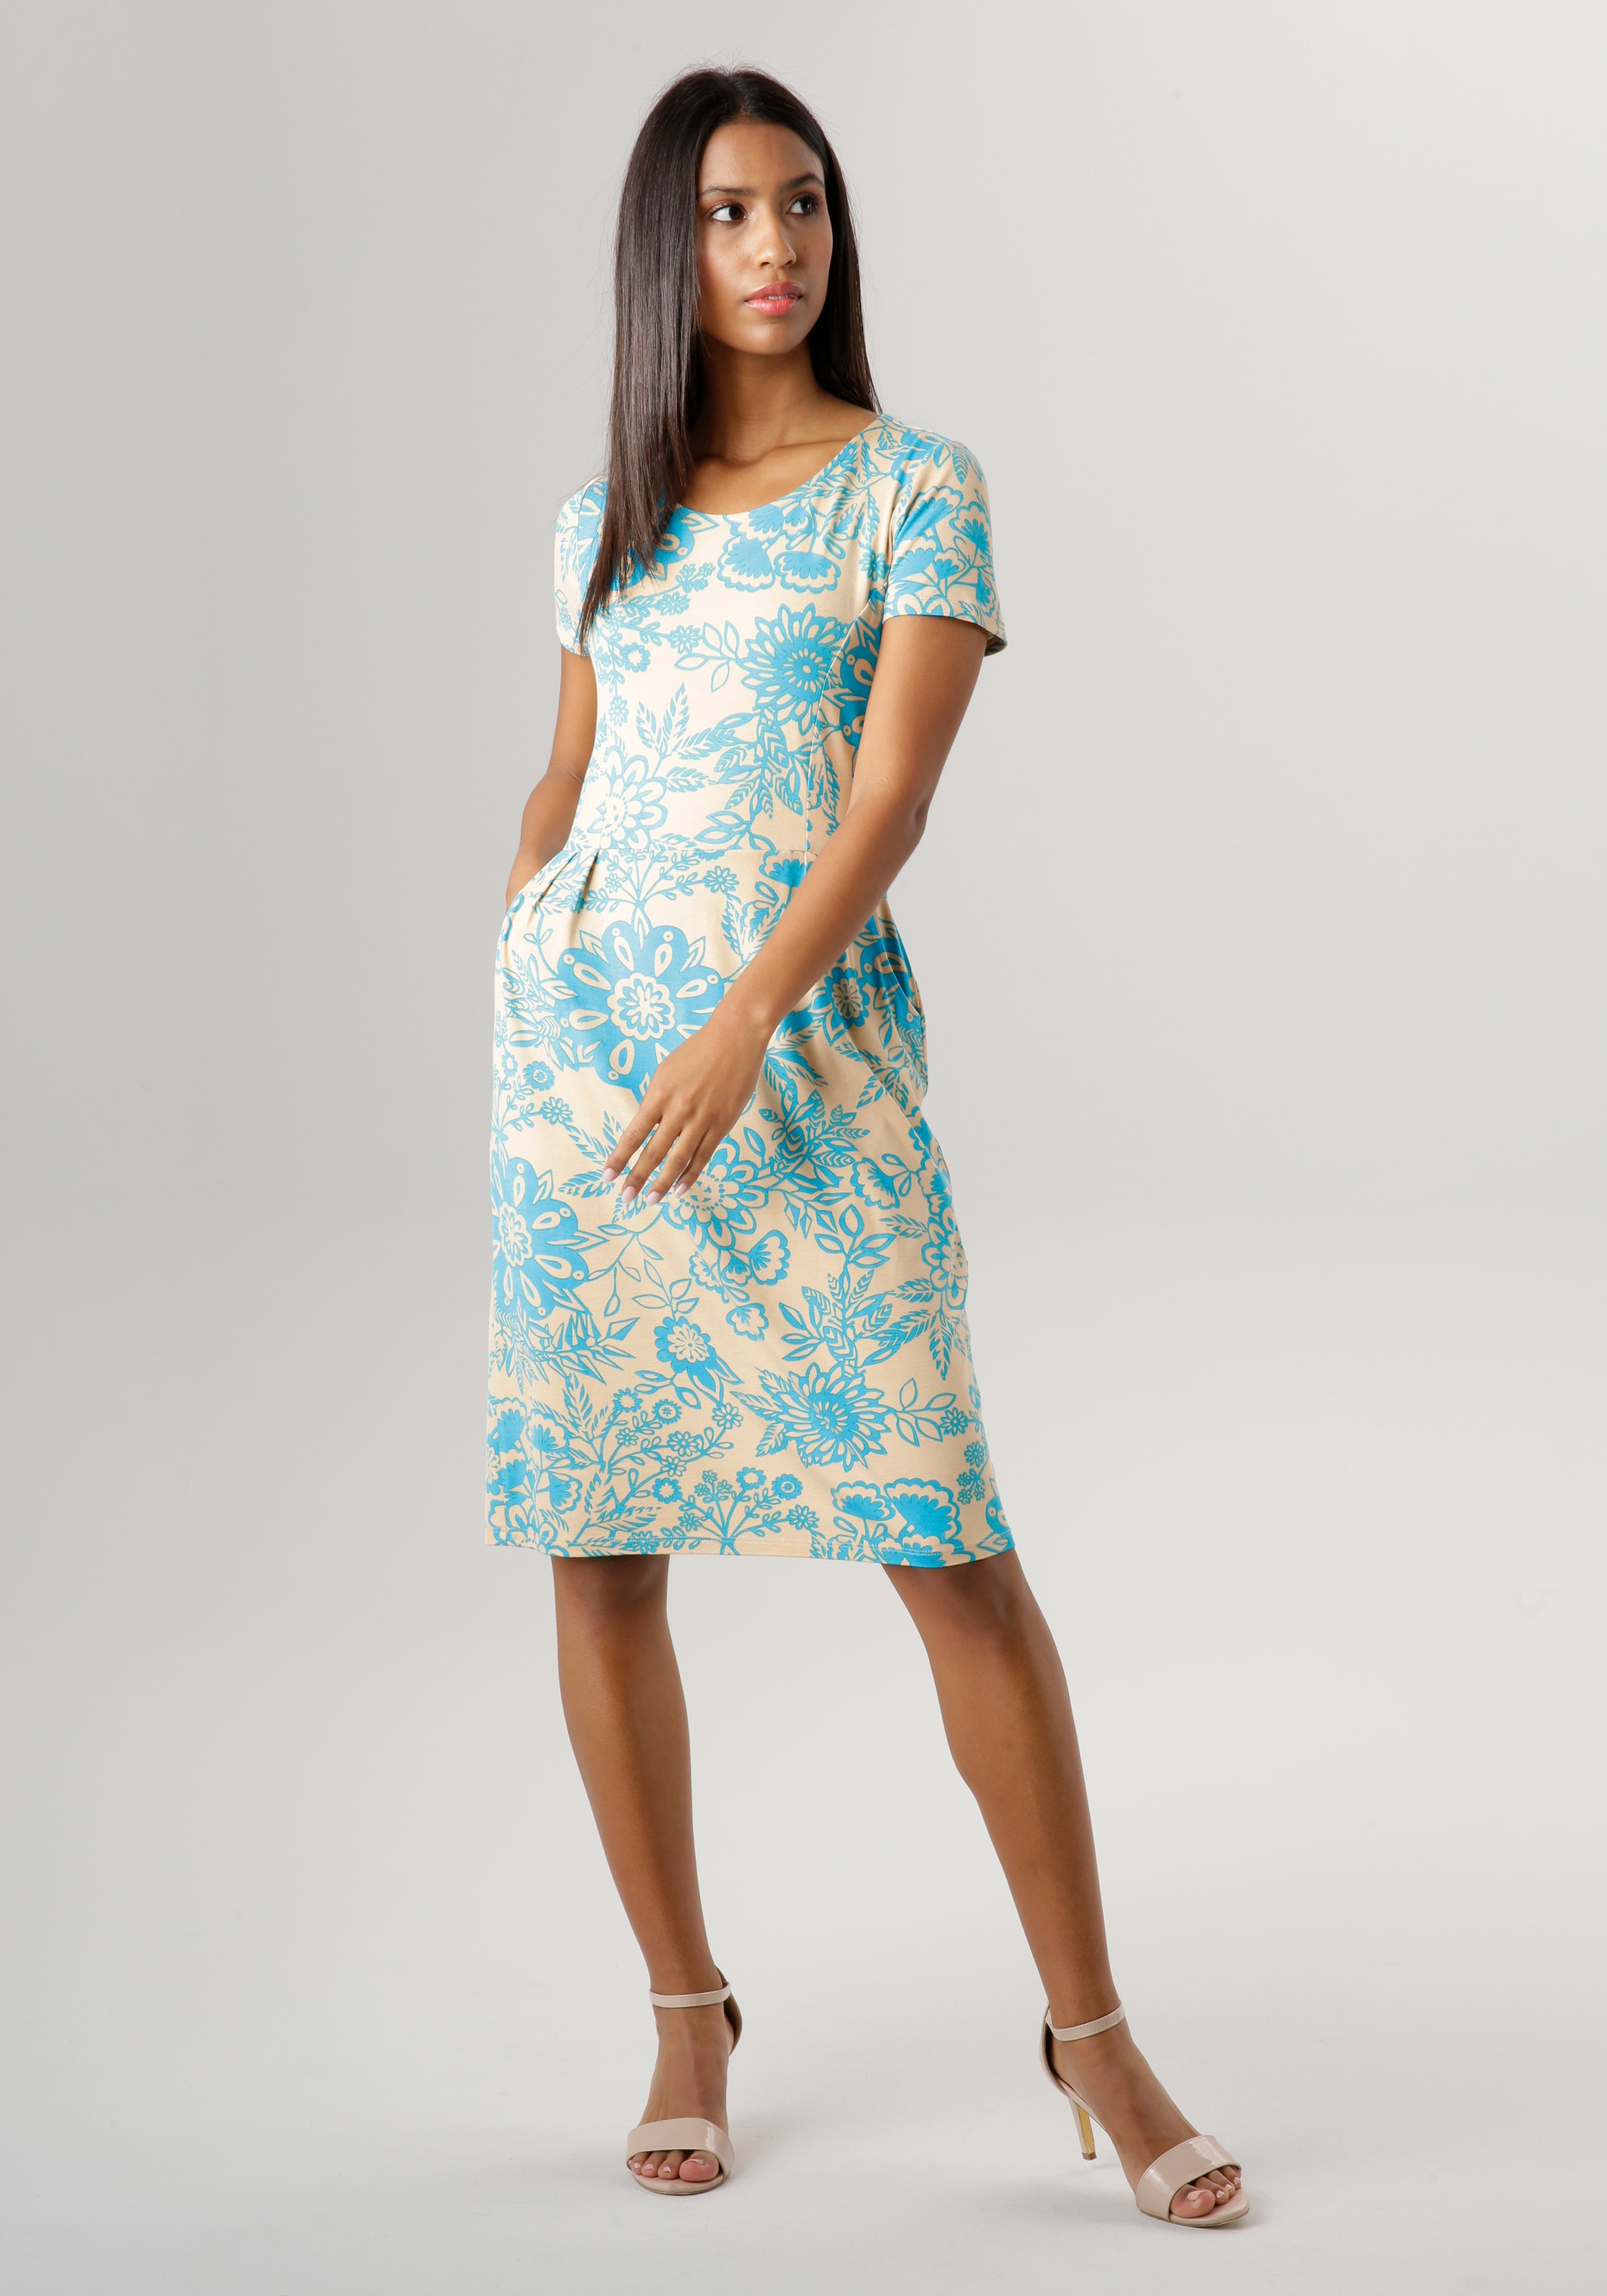 NEUE Sommerkleid, Mandala-Optik - Aniston auf Blumendruck KOLLEKTION SELECTED in versandkostenfrei mit